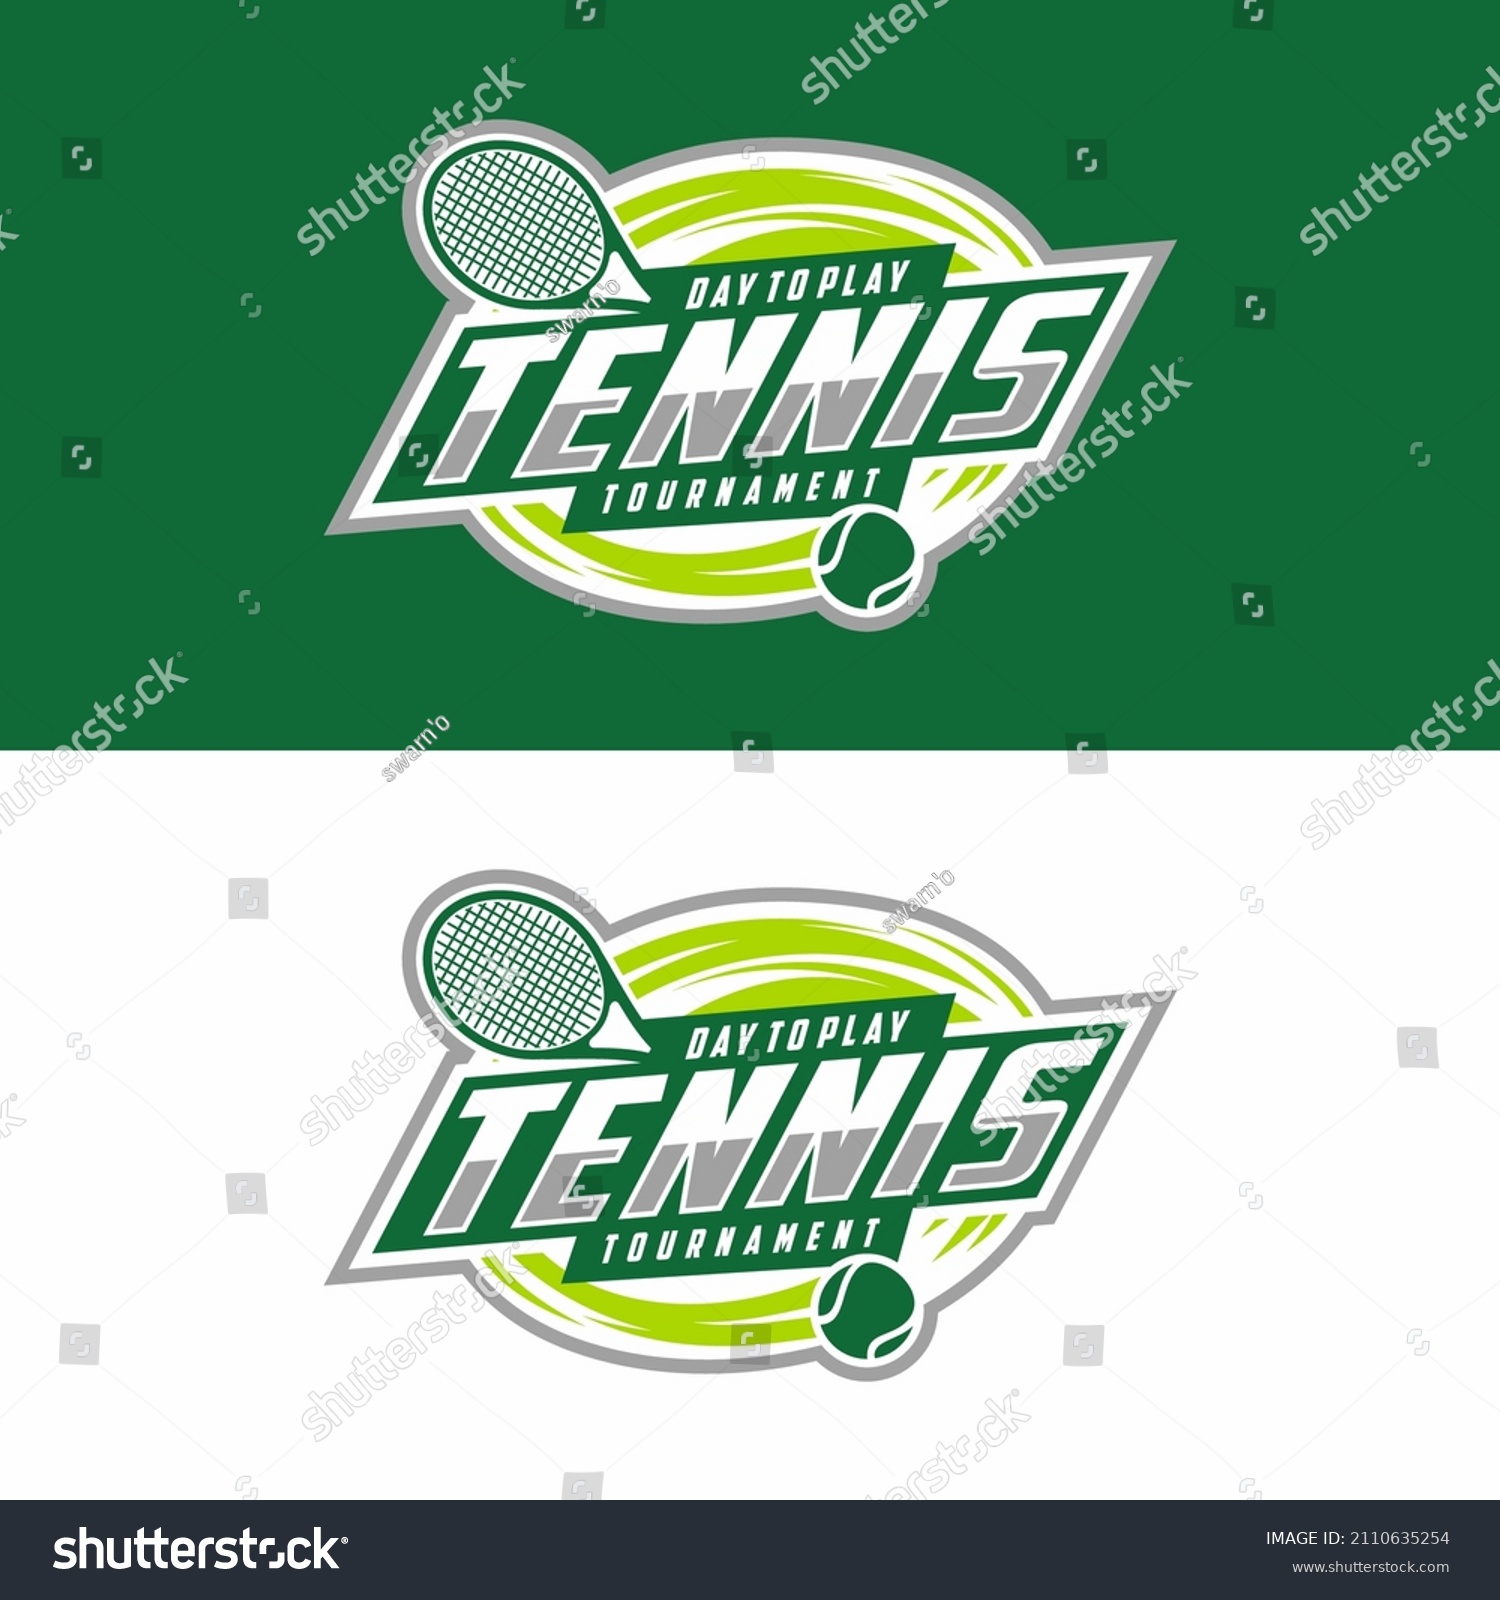 Tennis logo icon design, sports badge template. Vector illustration #2110635254